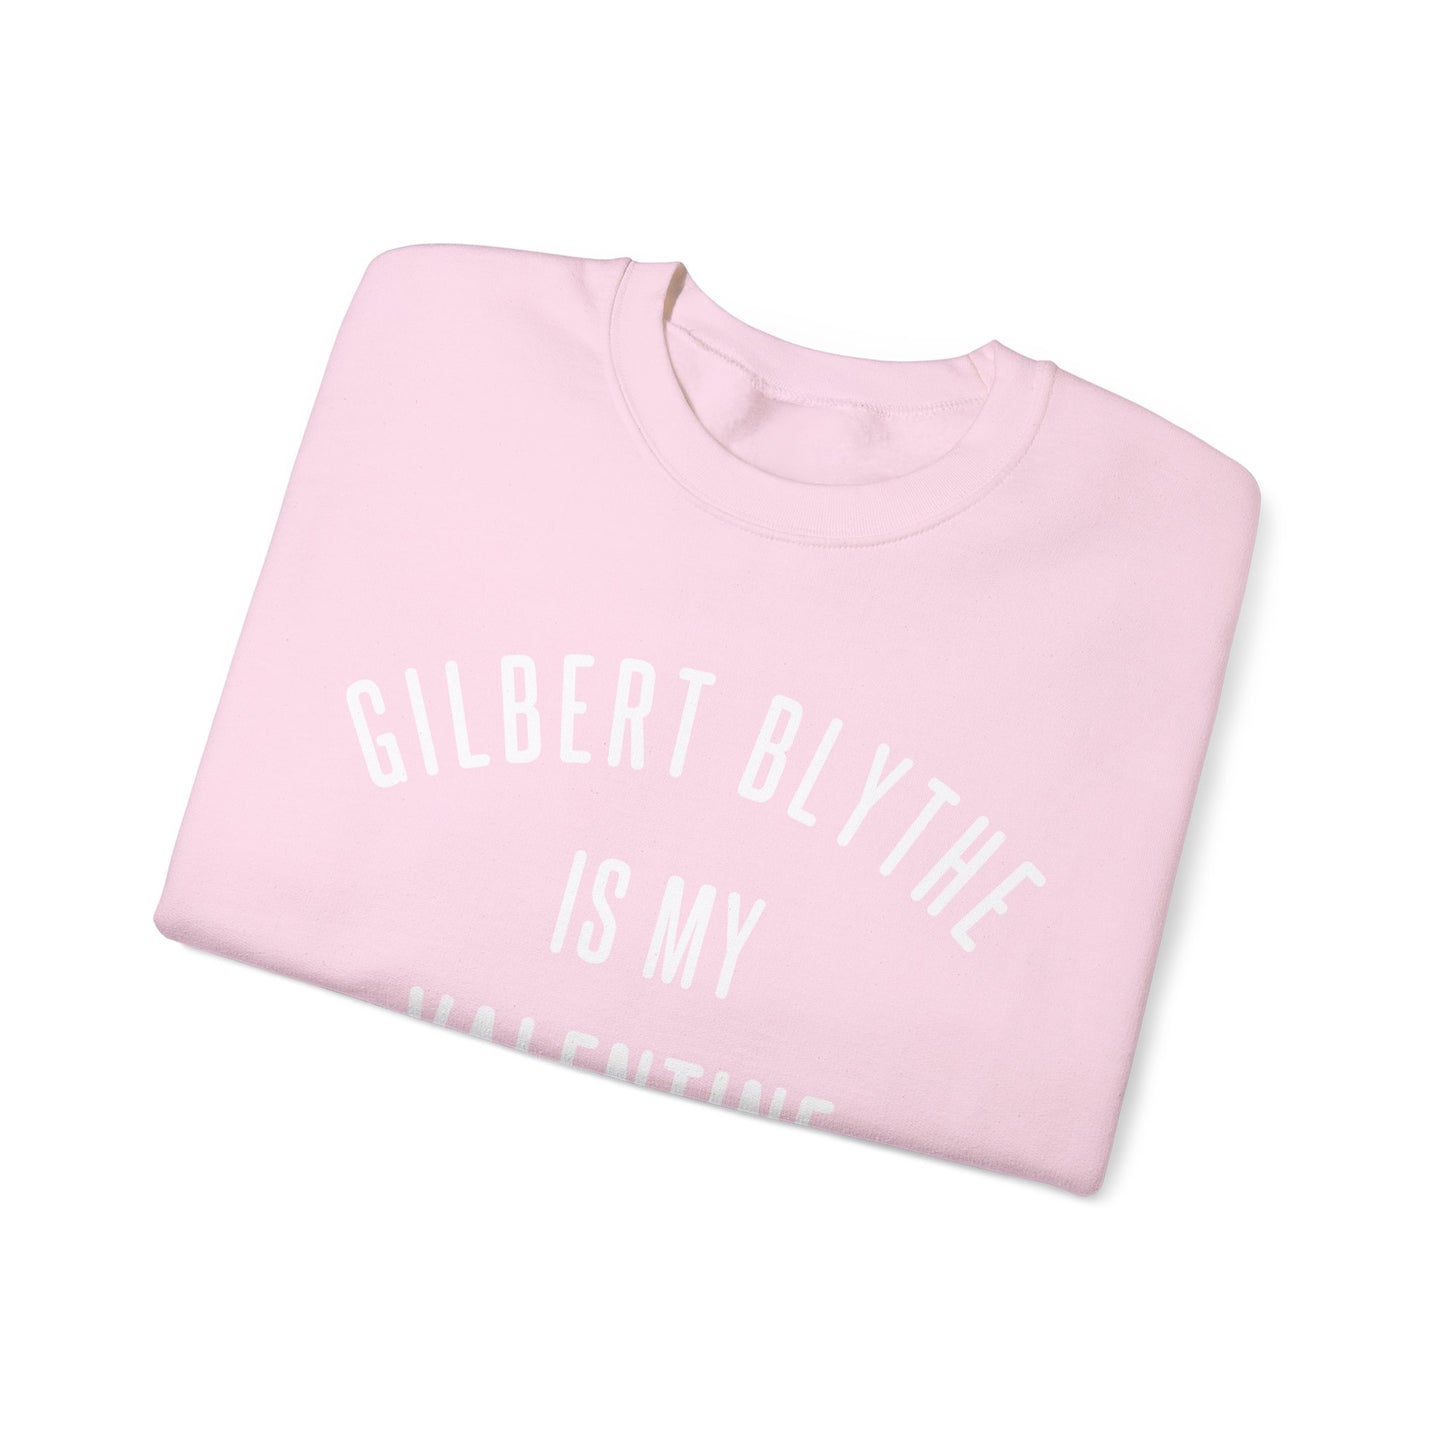 Gilbert Blythe is my Valentine Crewneck Sweatshirt